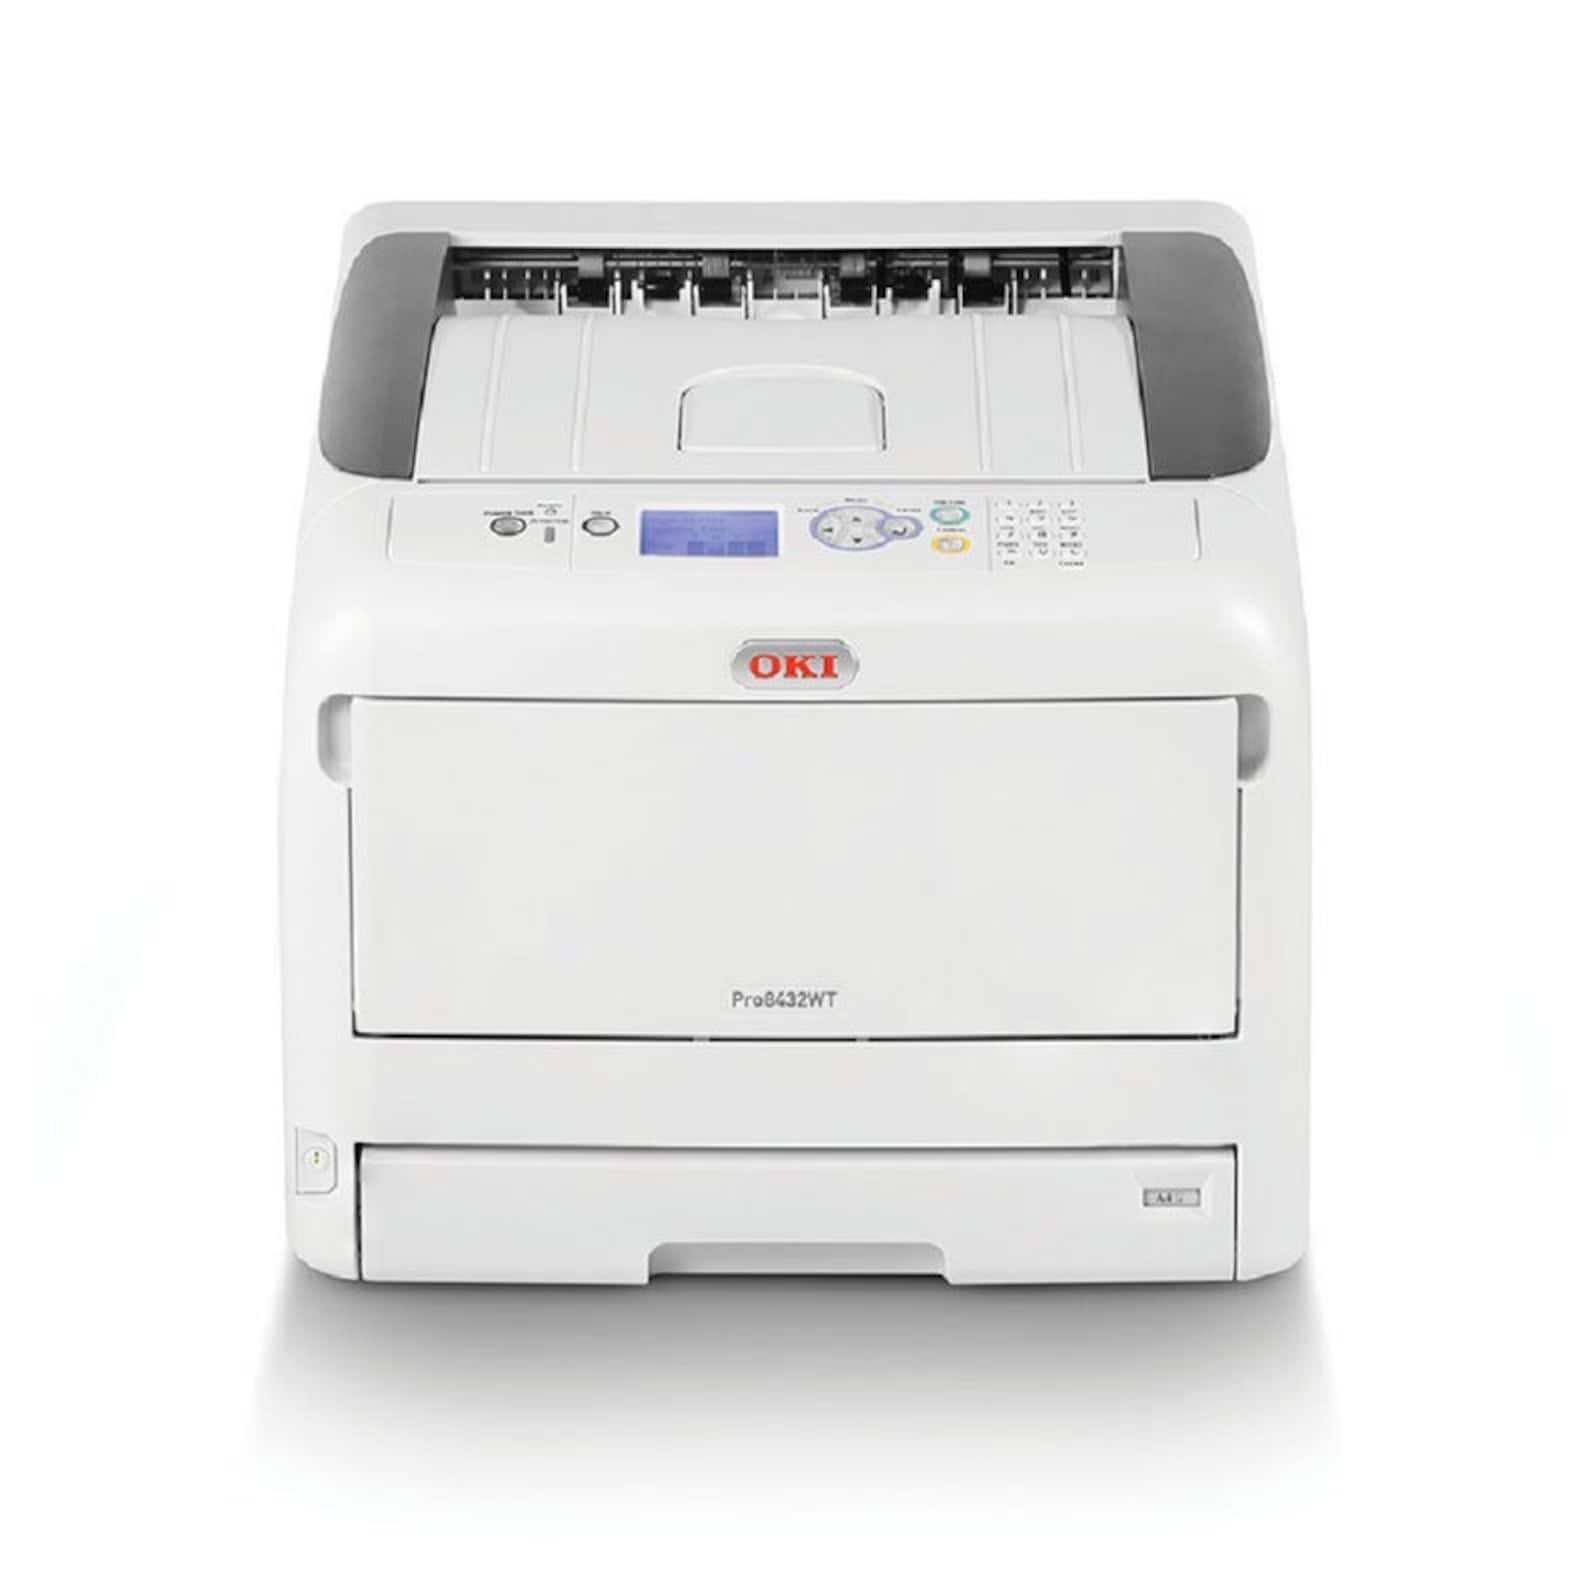 Crio 8432WDT White Toner Printer Bundle